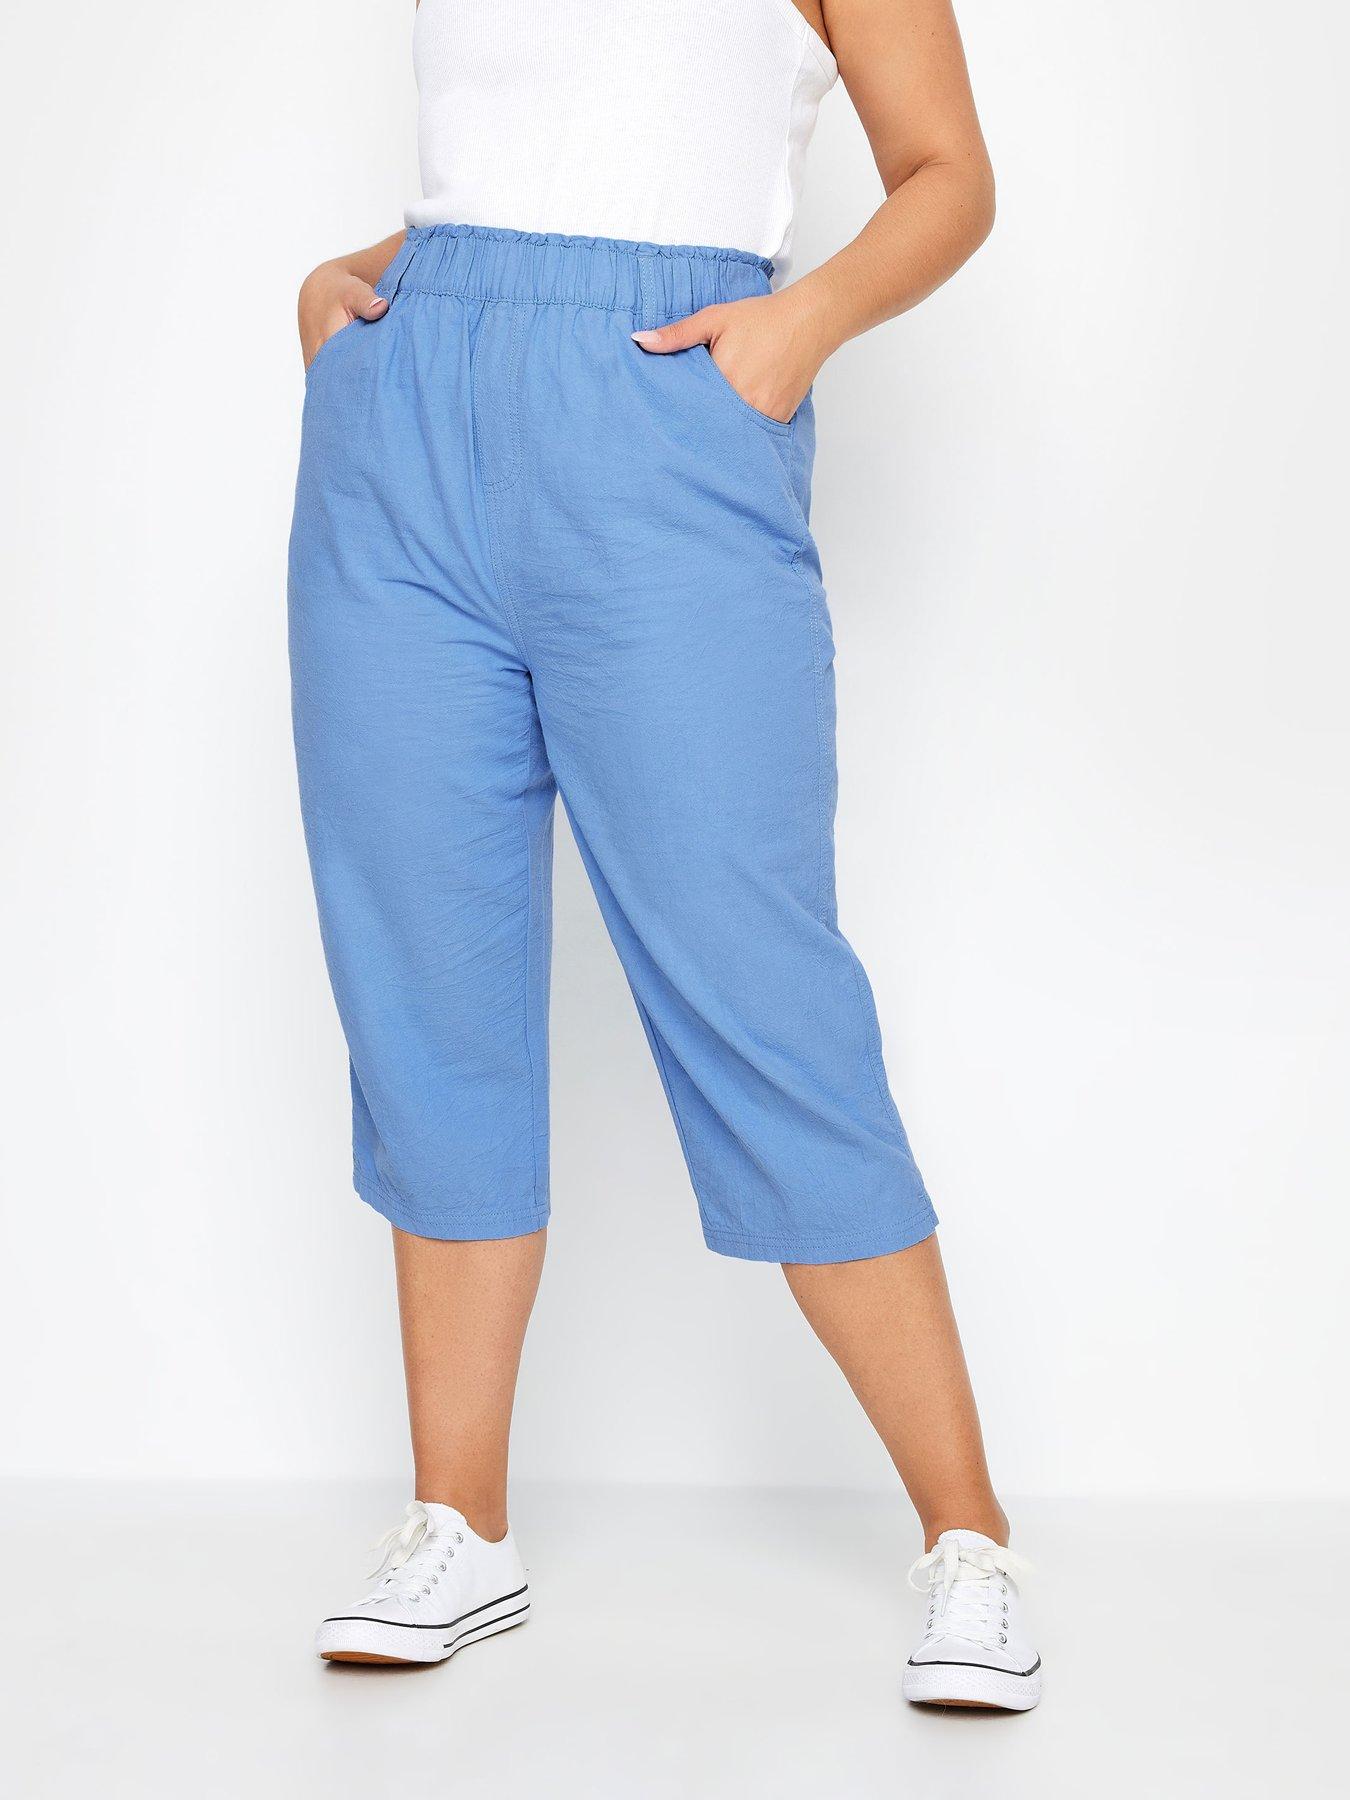 Ladies Plus Size 3/4 Cropped Stretchy High Waist Capri Pants Cargo